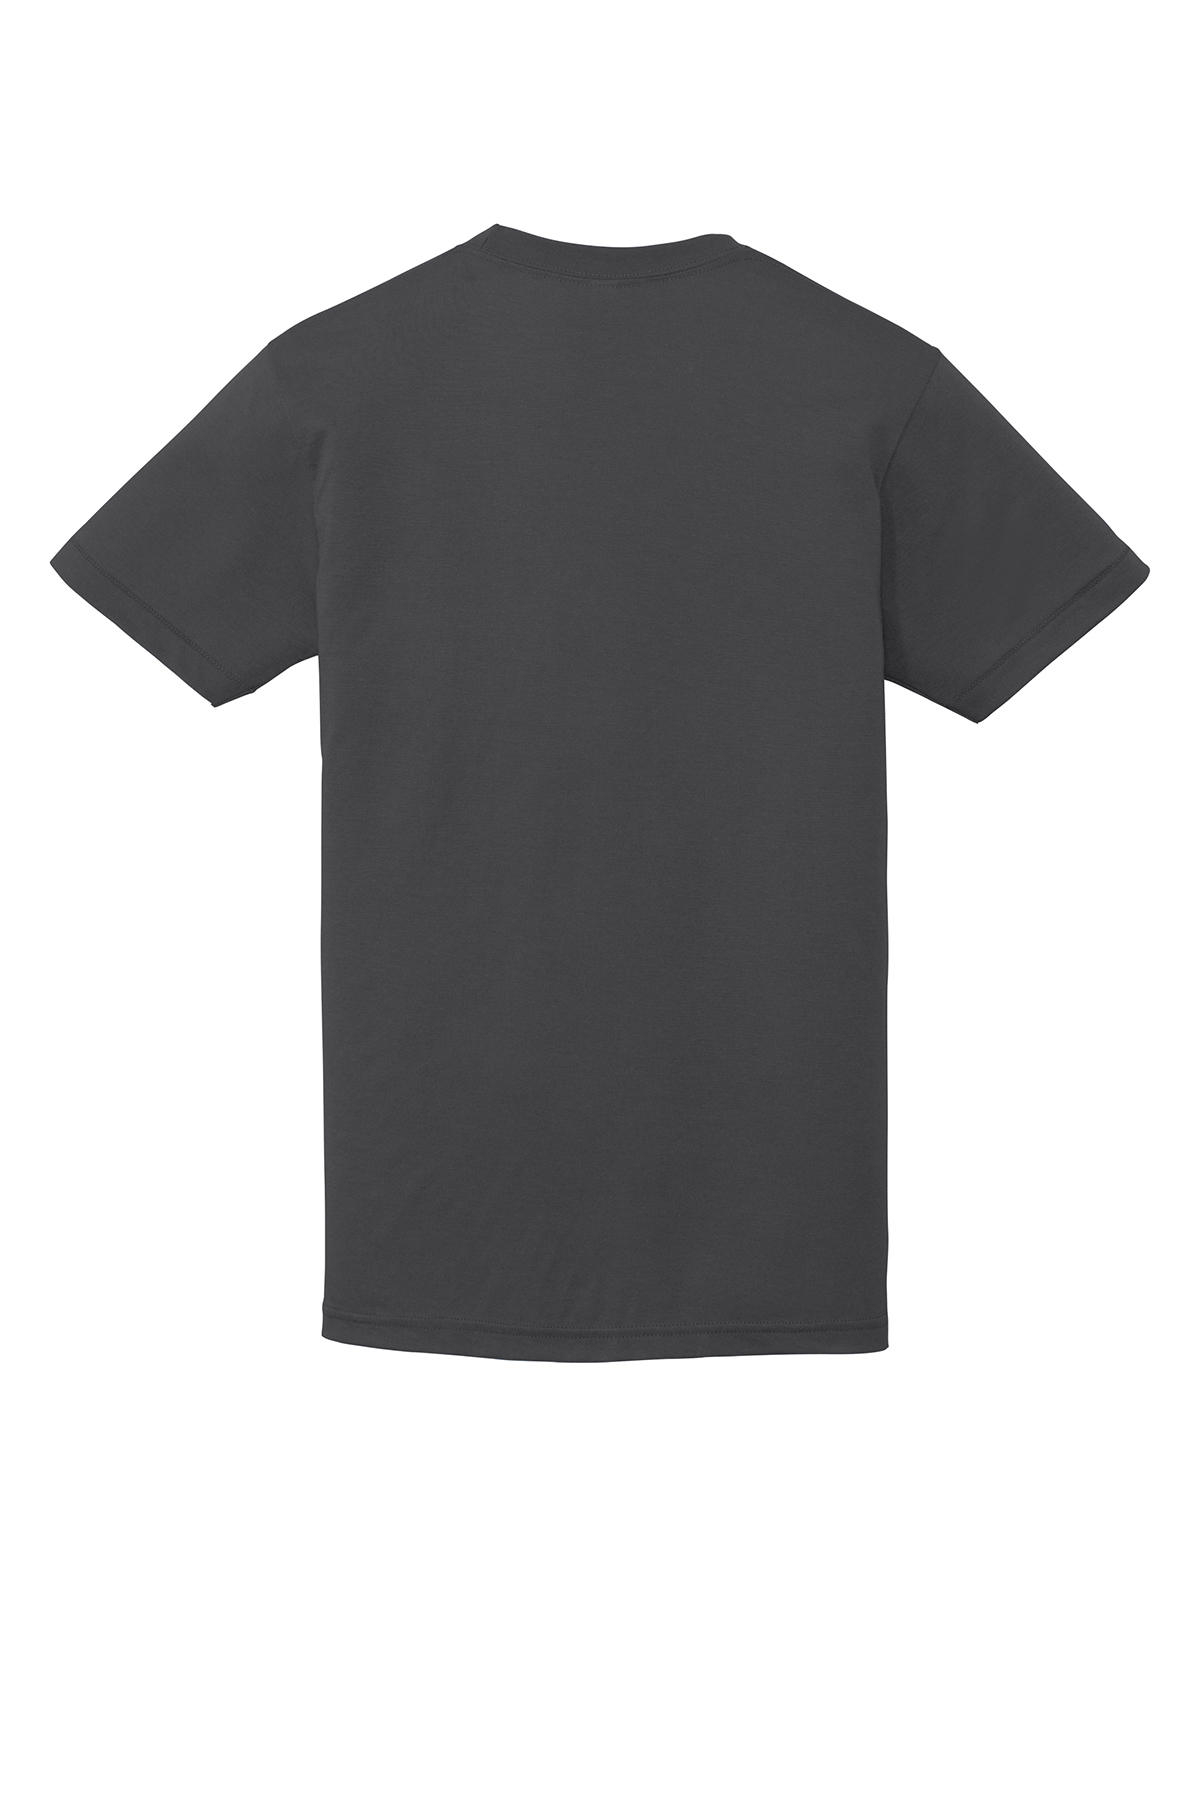 American Apparel Poly-Cotton T-Shirt | Product | SanMar